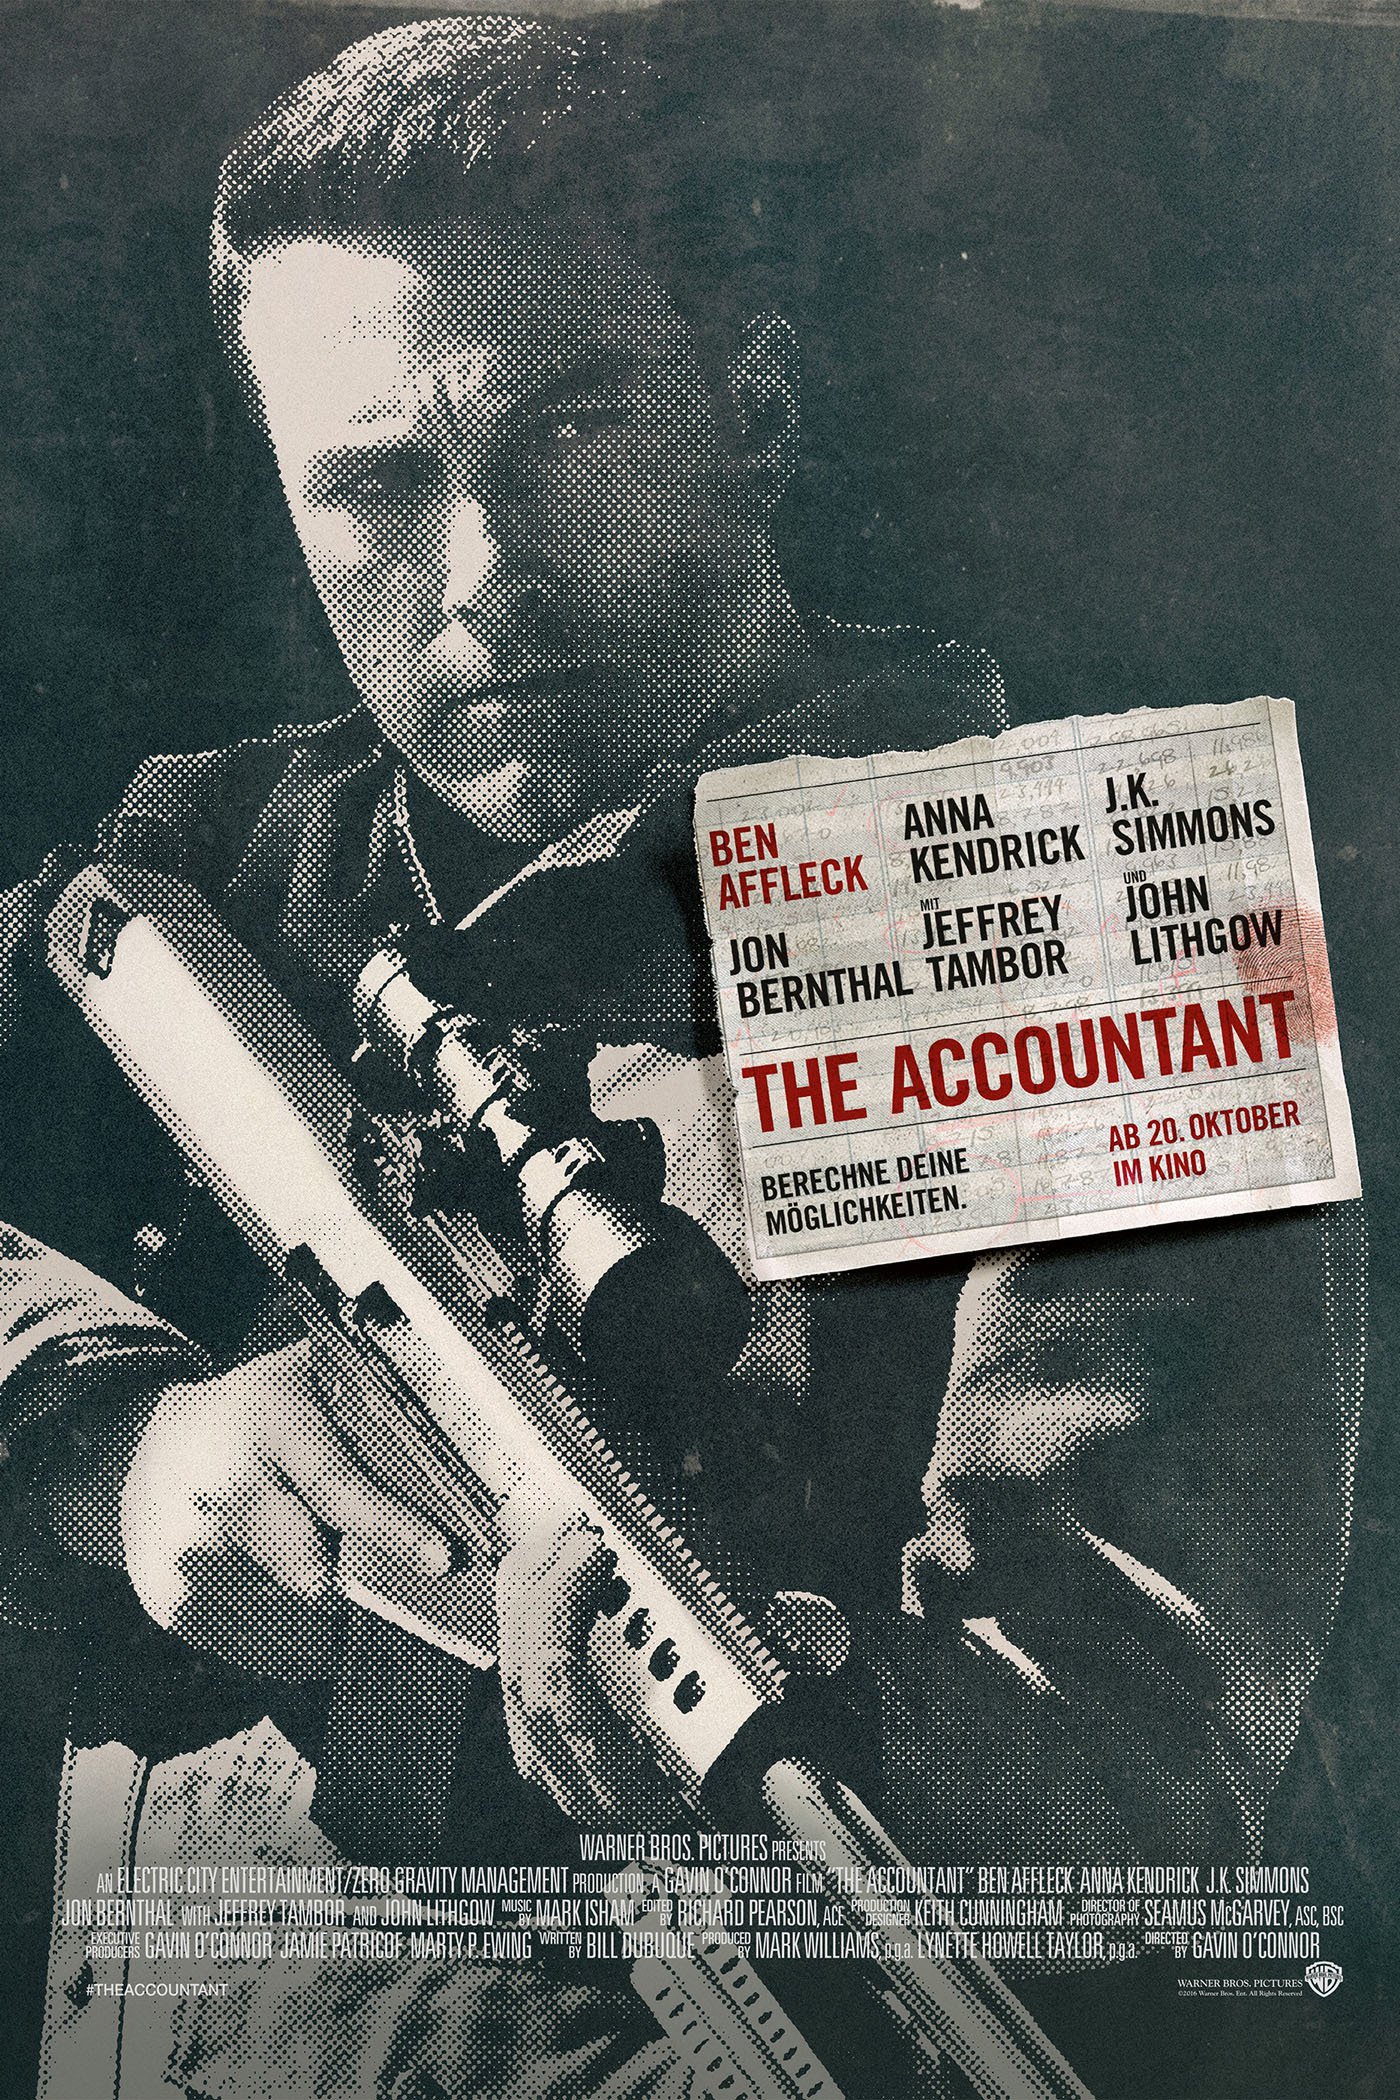 Plakat von "The Accountant"